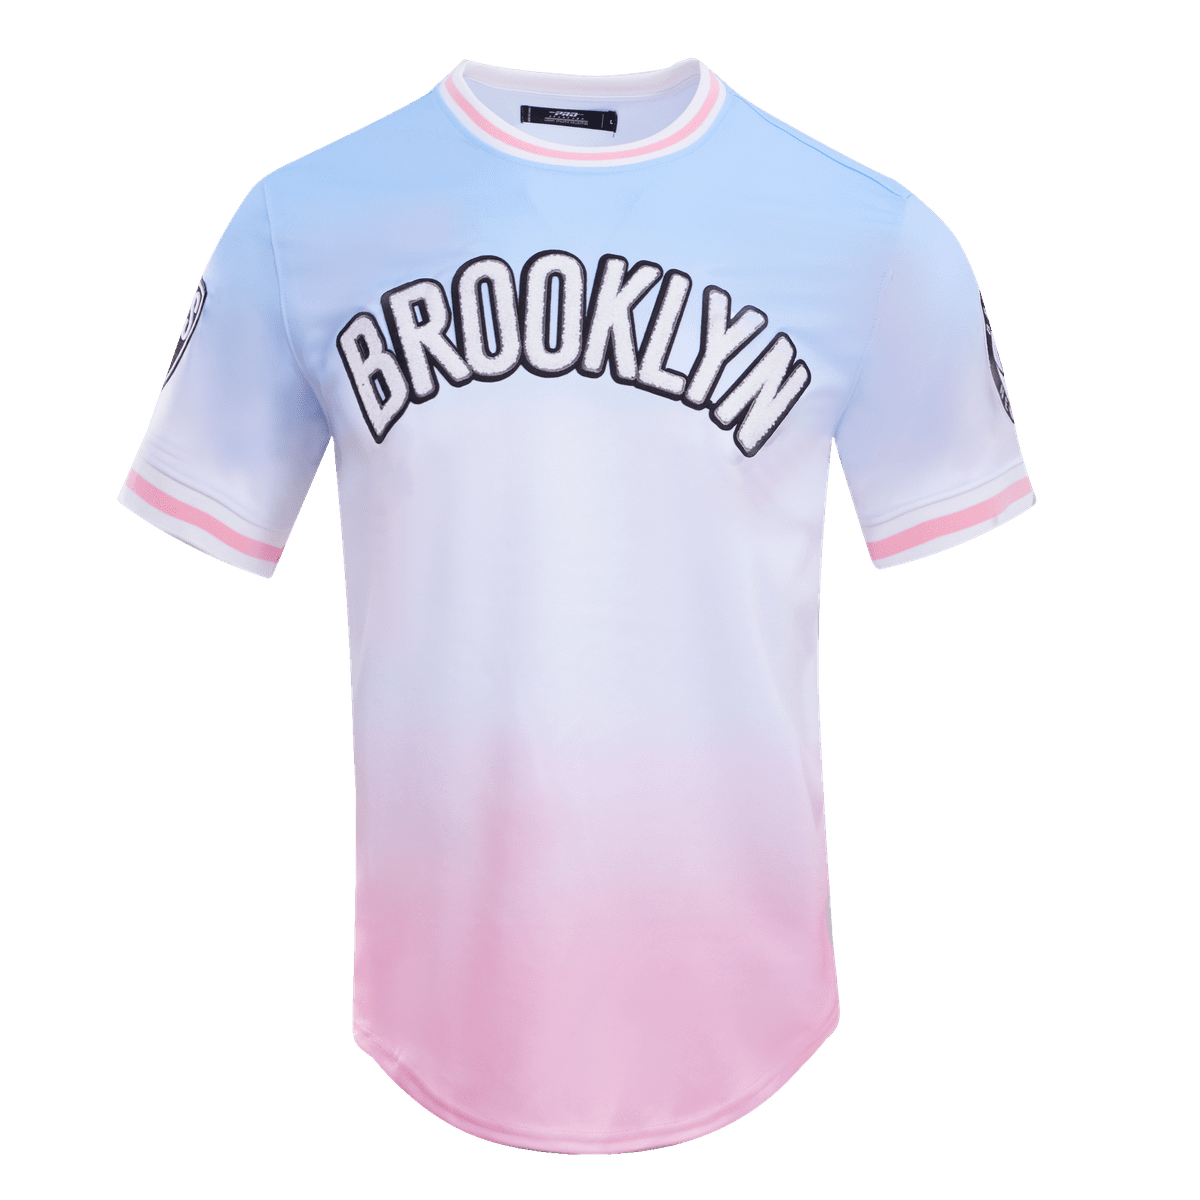 2020-2021 NBA Brooklyn Nets Gray Jacket Uniform With Hat-815